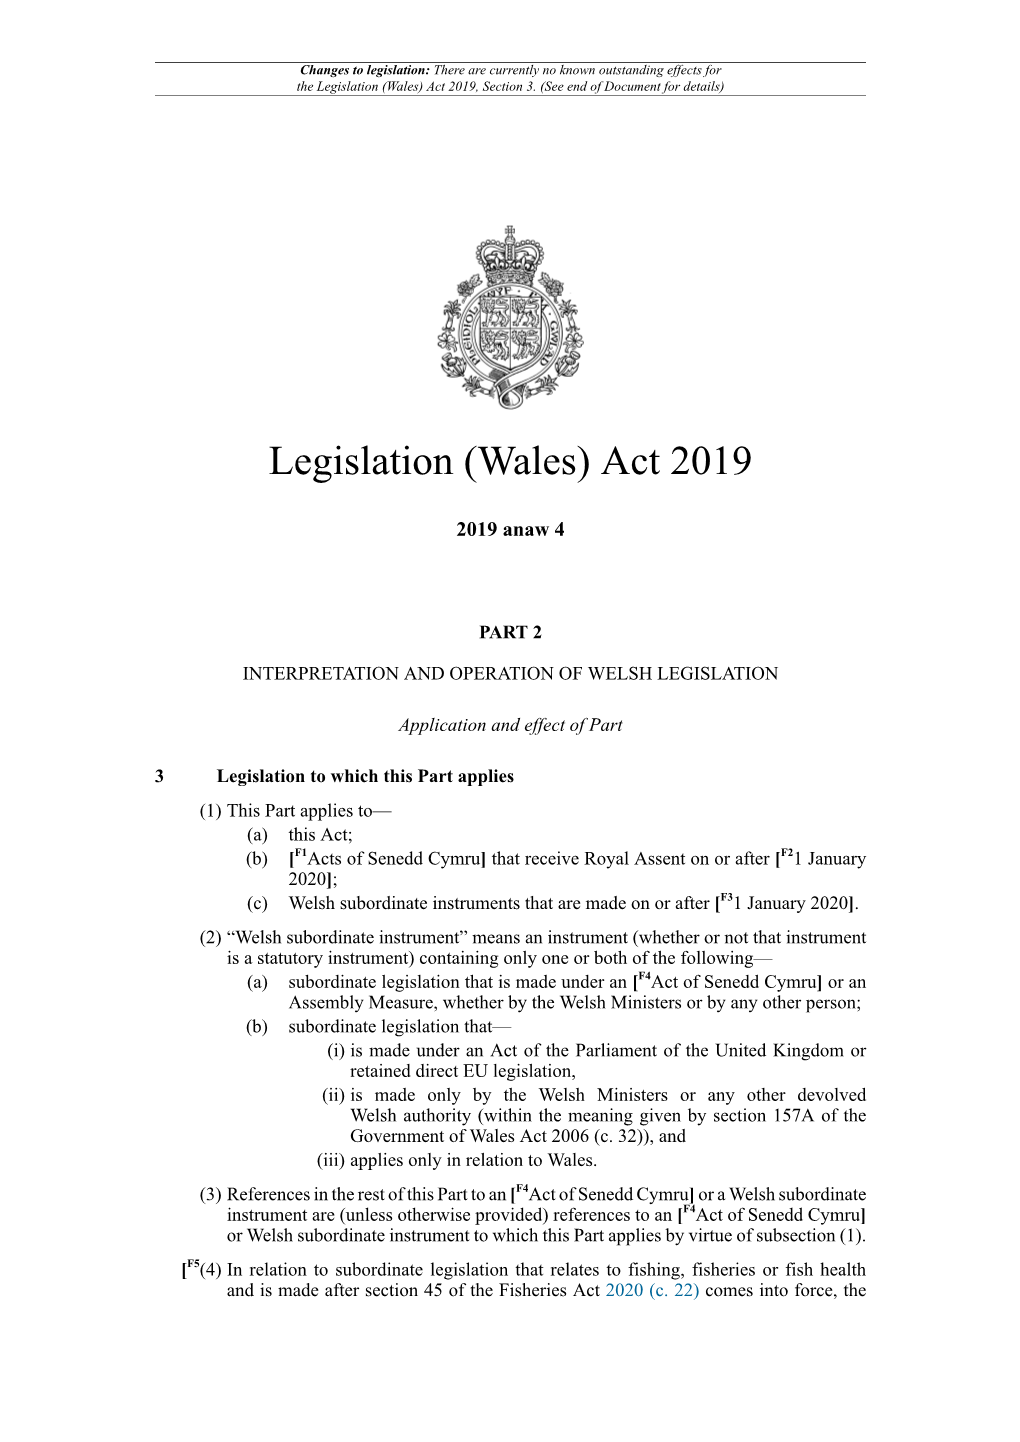 Legislation (Wales) Act 2019, Section 3